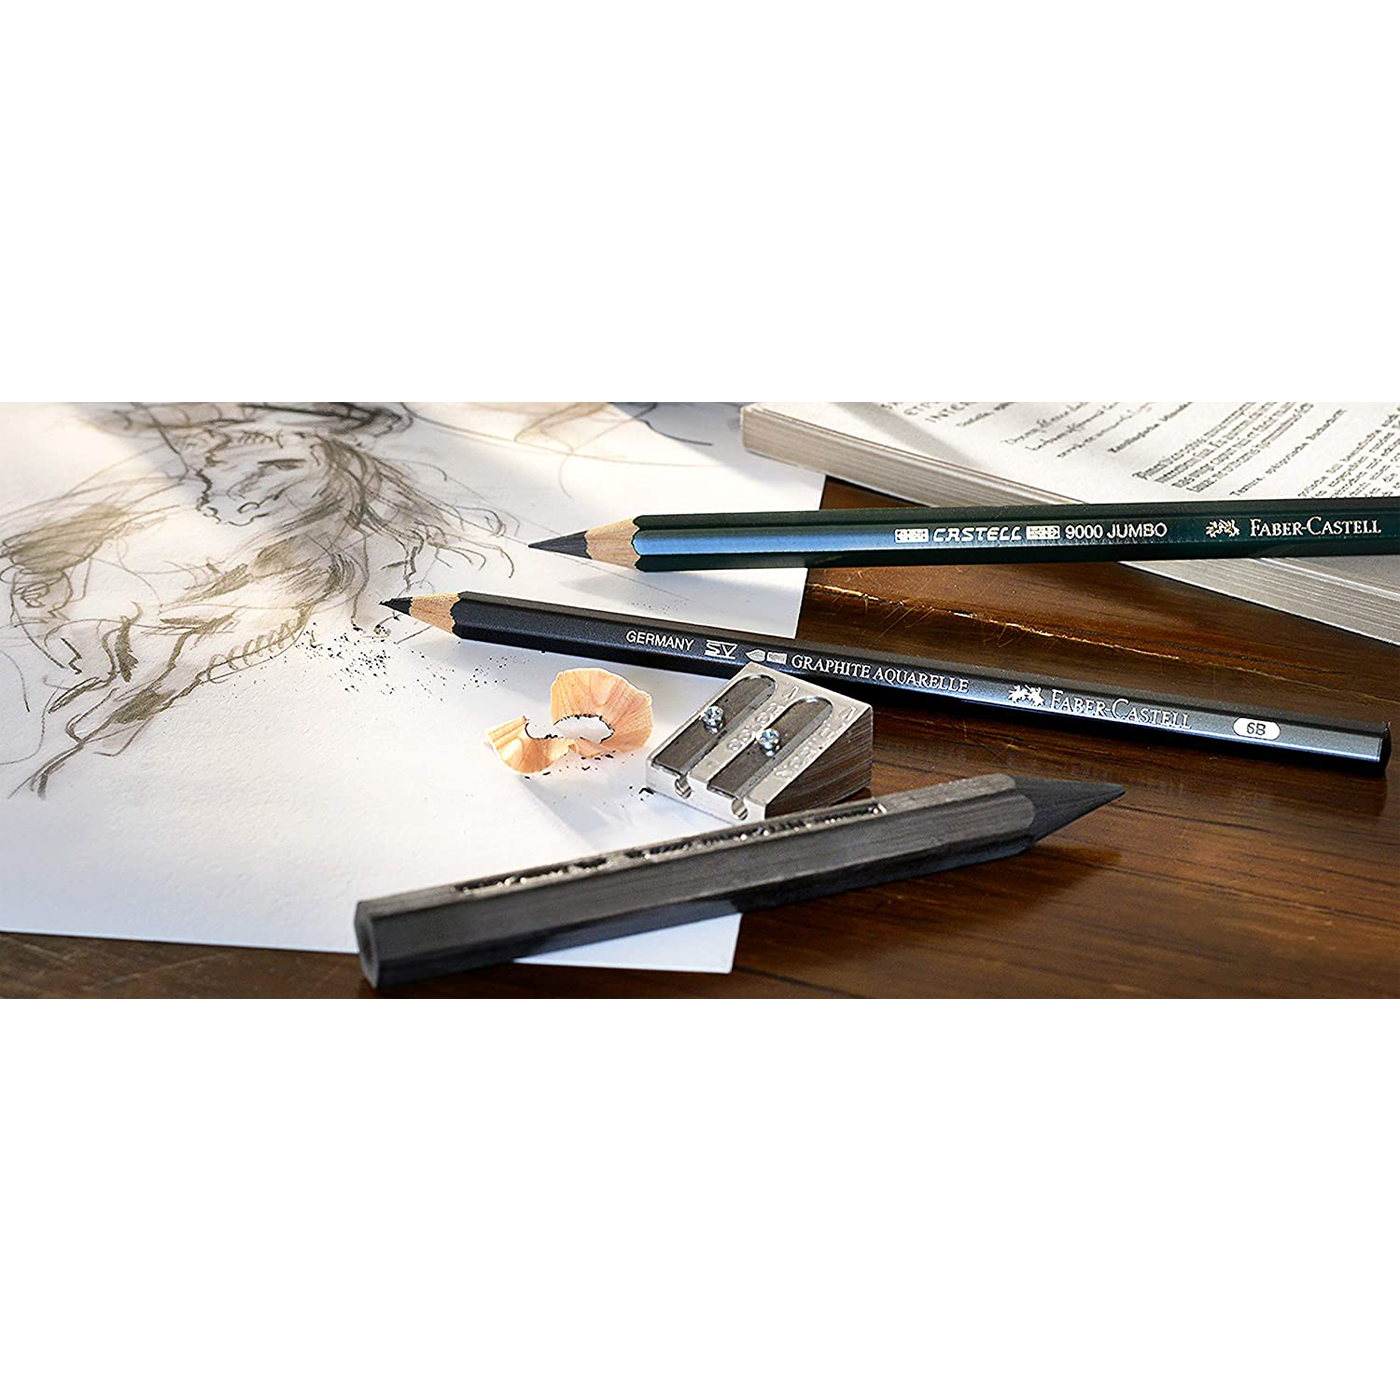 Faber-Castell Jumbo Graphite Pencil 9000 